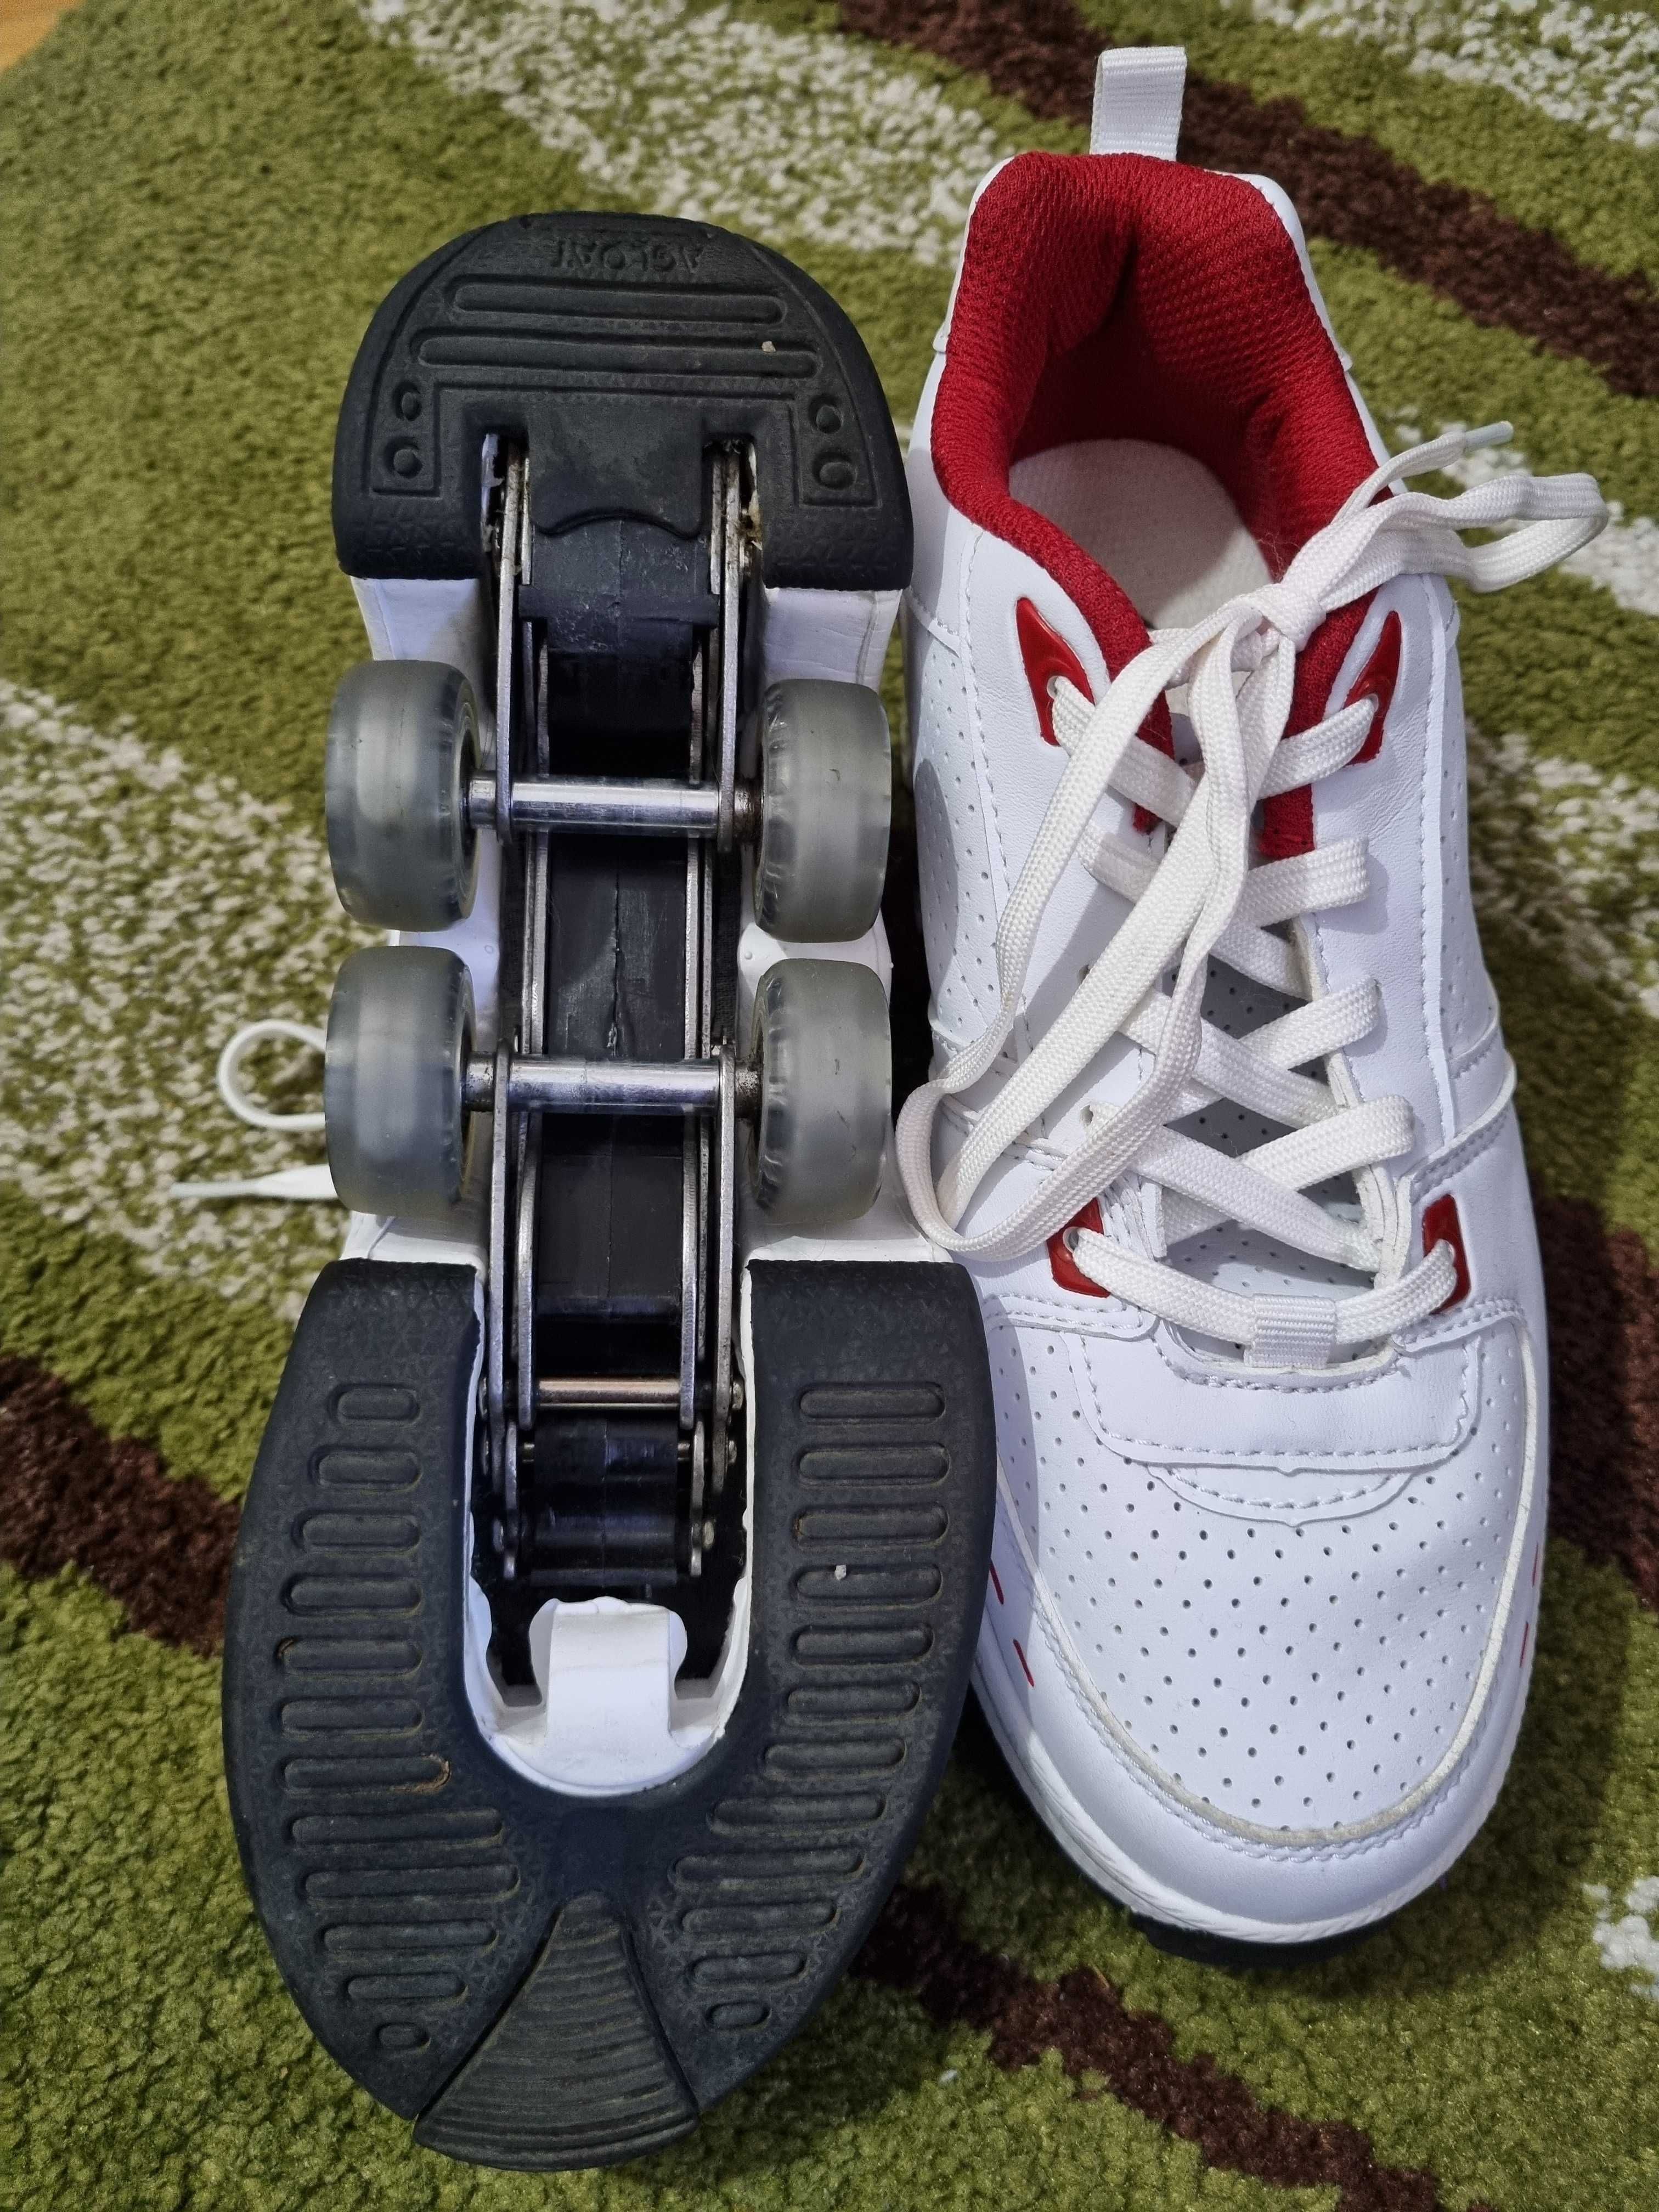 Adidasi AGLOAT Roller Skates